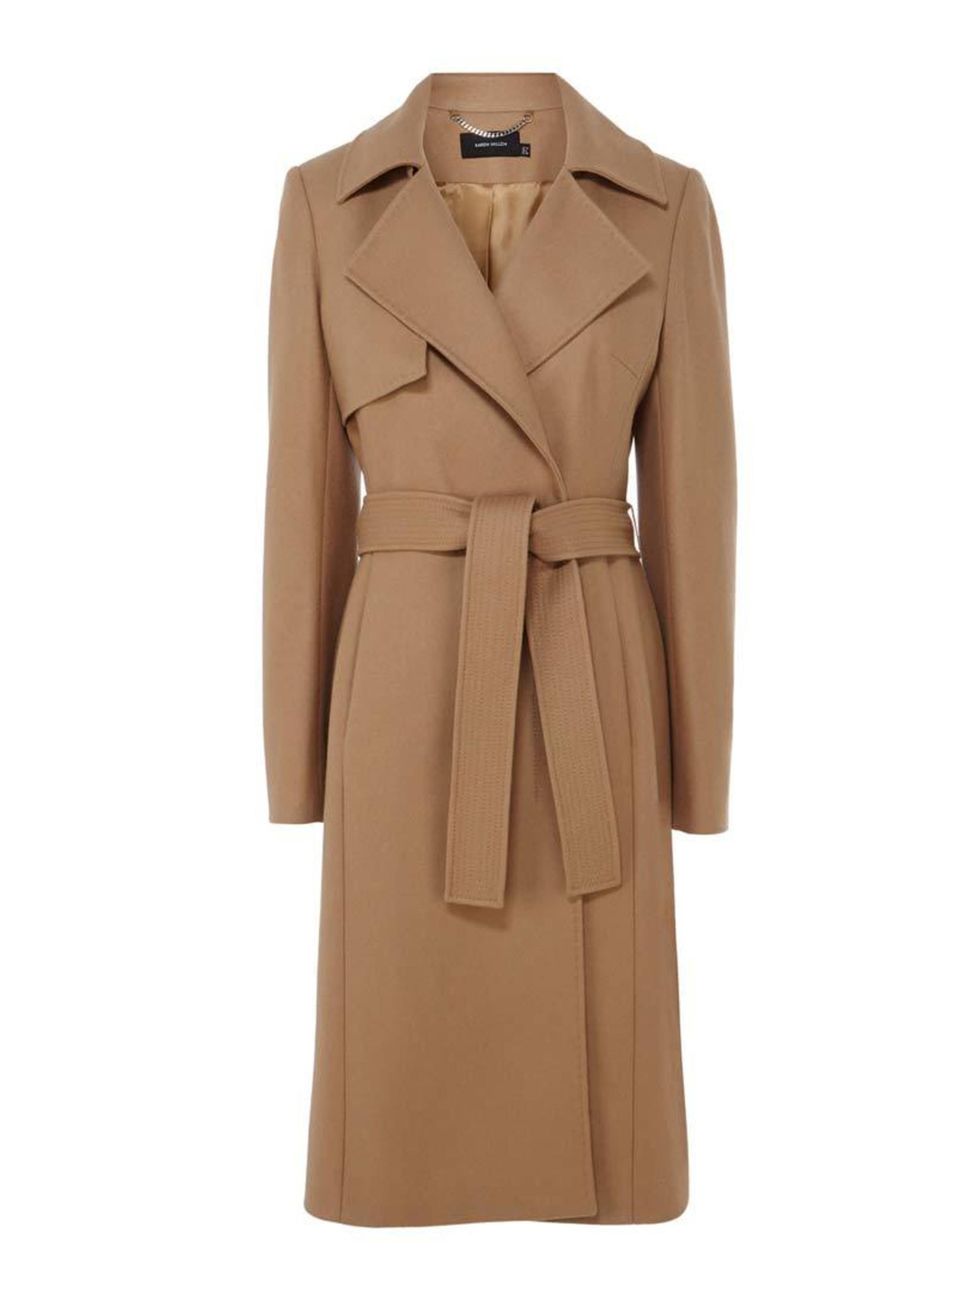 <p>Dress up denim with a little ladylike camel.</p>

<p><a href="http://www.karenmillen.com/ultimate-camel-coat/new-in/karenmillen/fcp-product/011CT05521" target="_blank">Karen Millen</a> coat, £325</p>